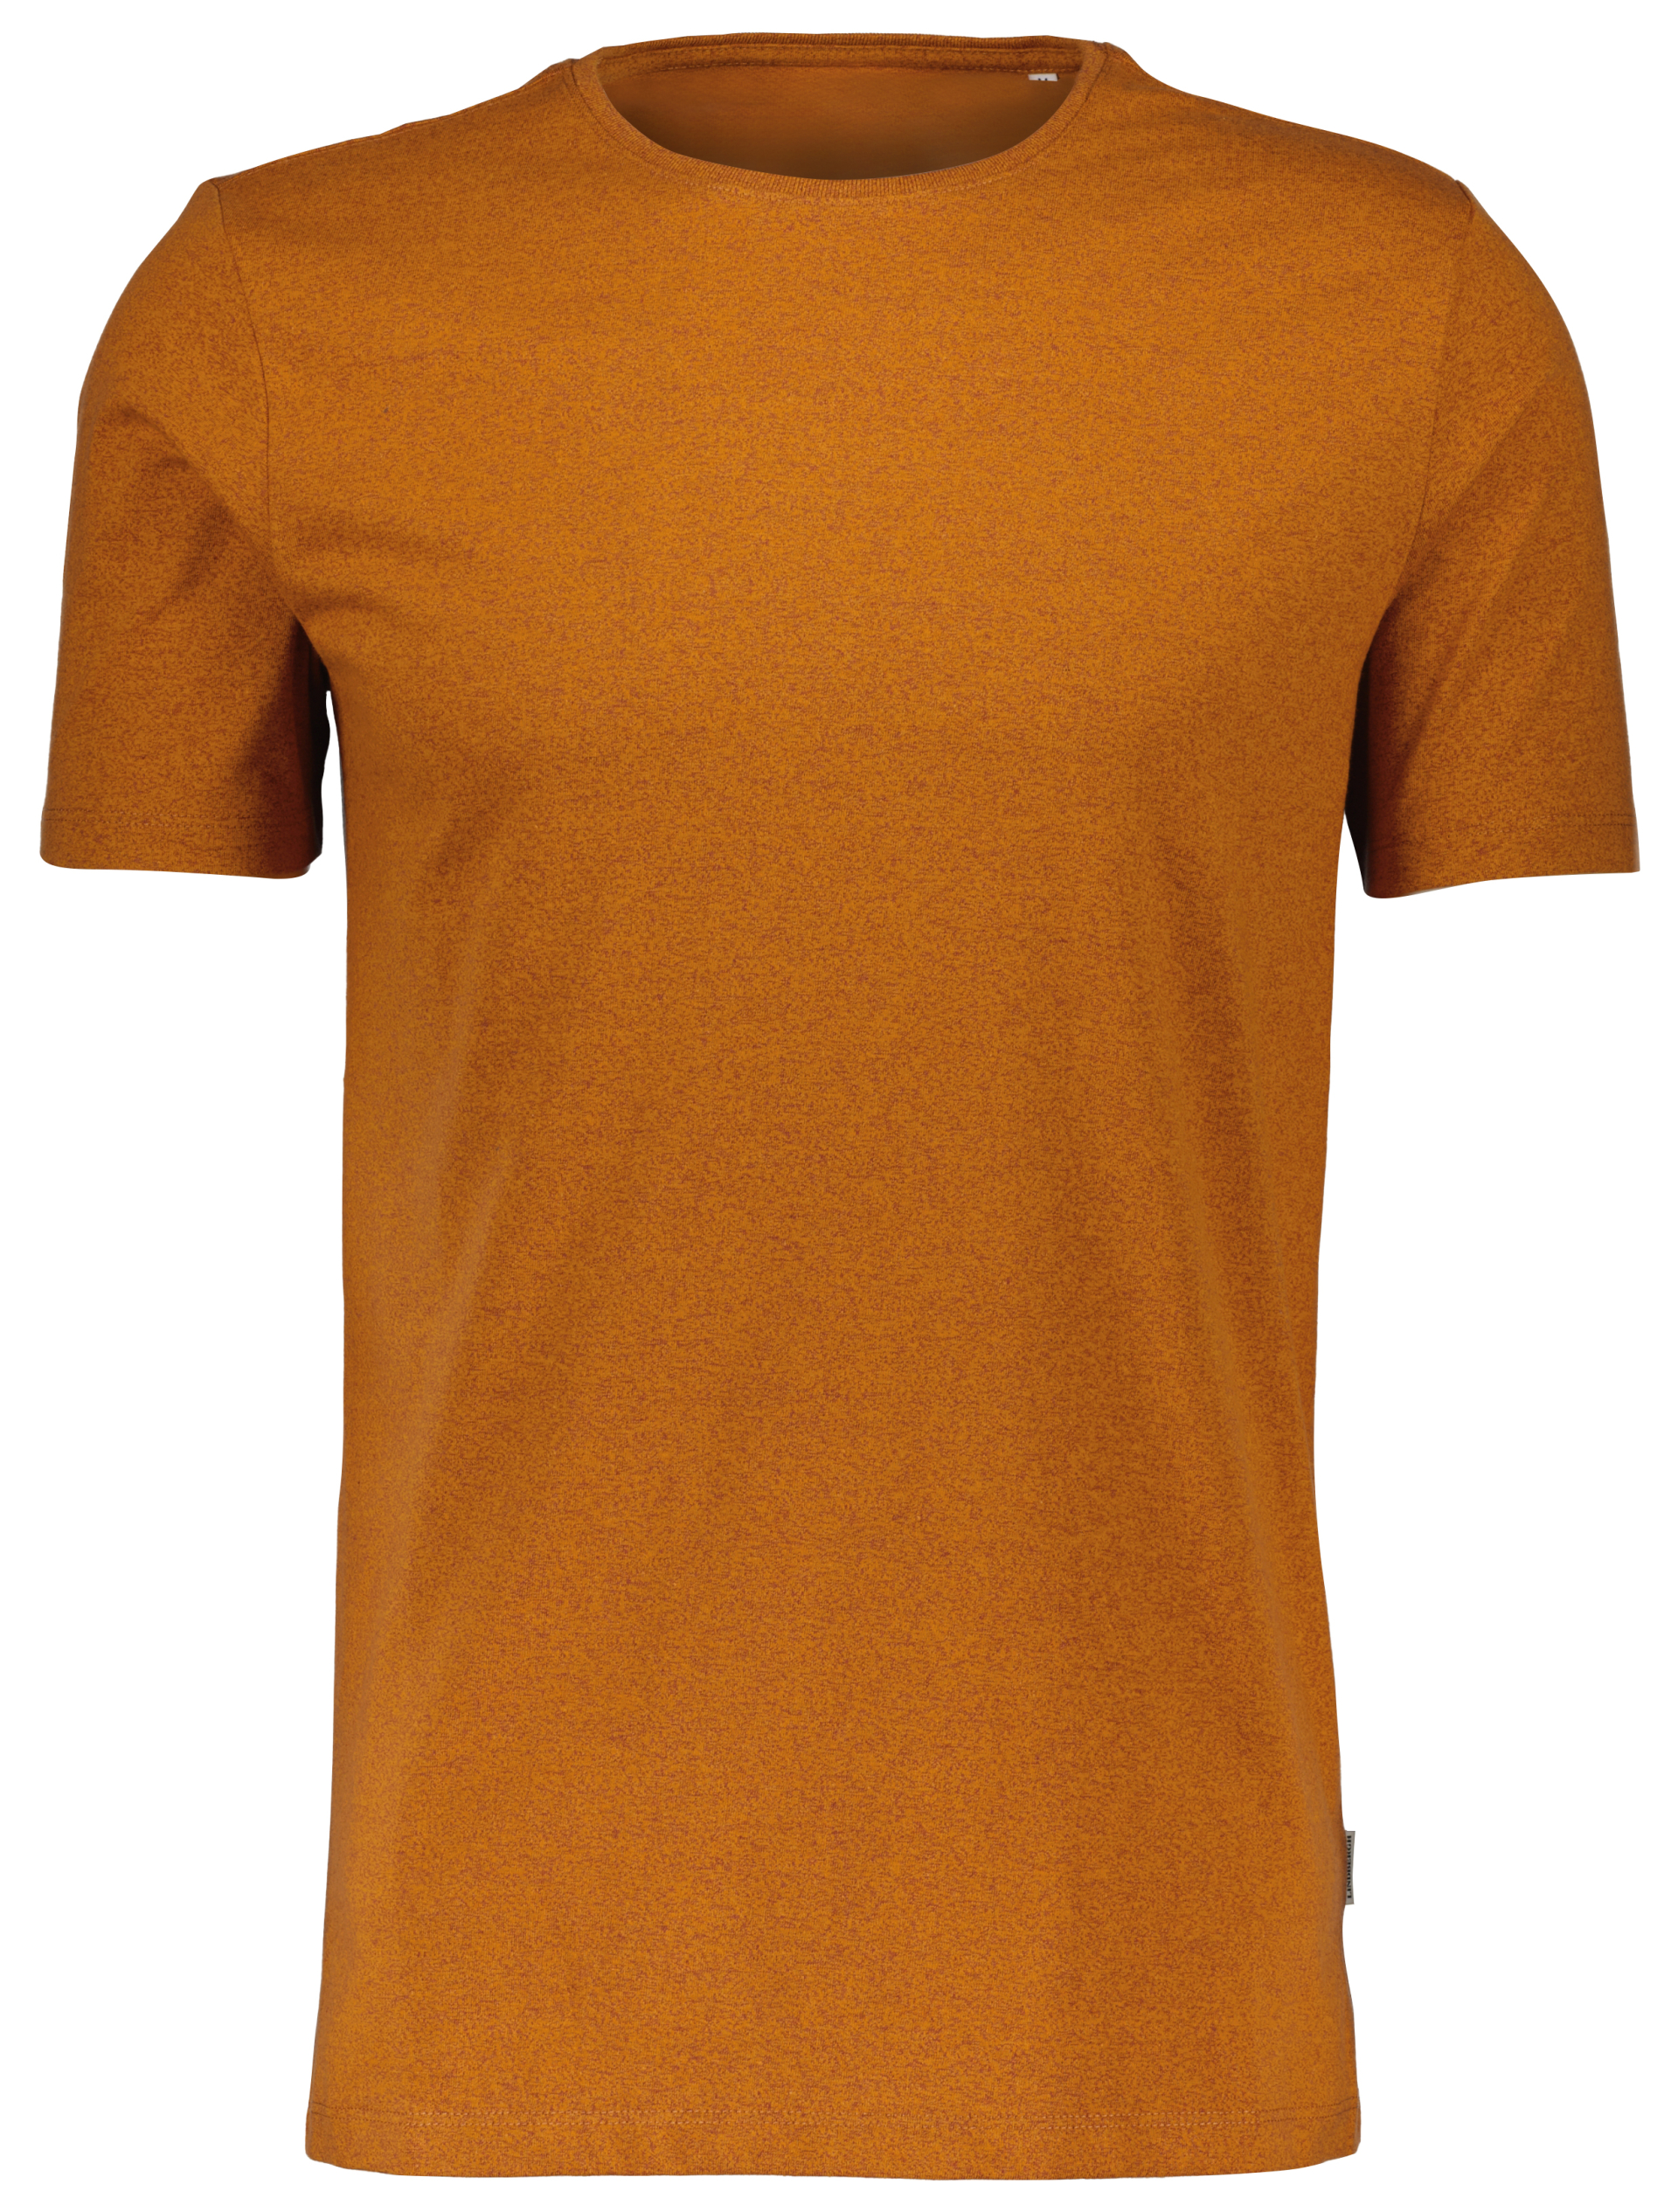 Lindbergh T-shirt orange / dk burnt orange mix